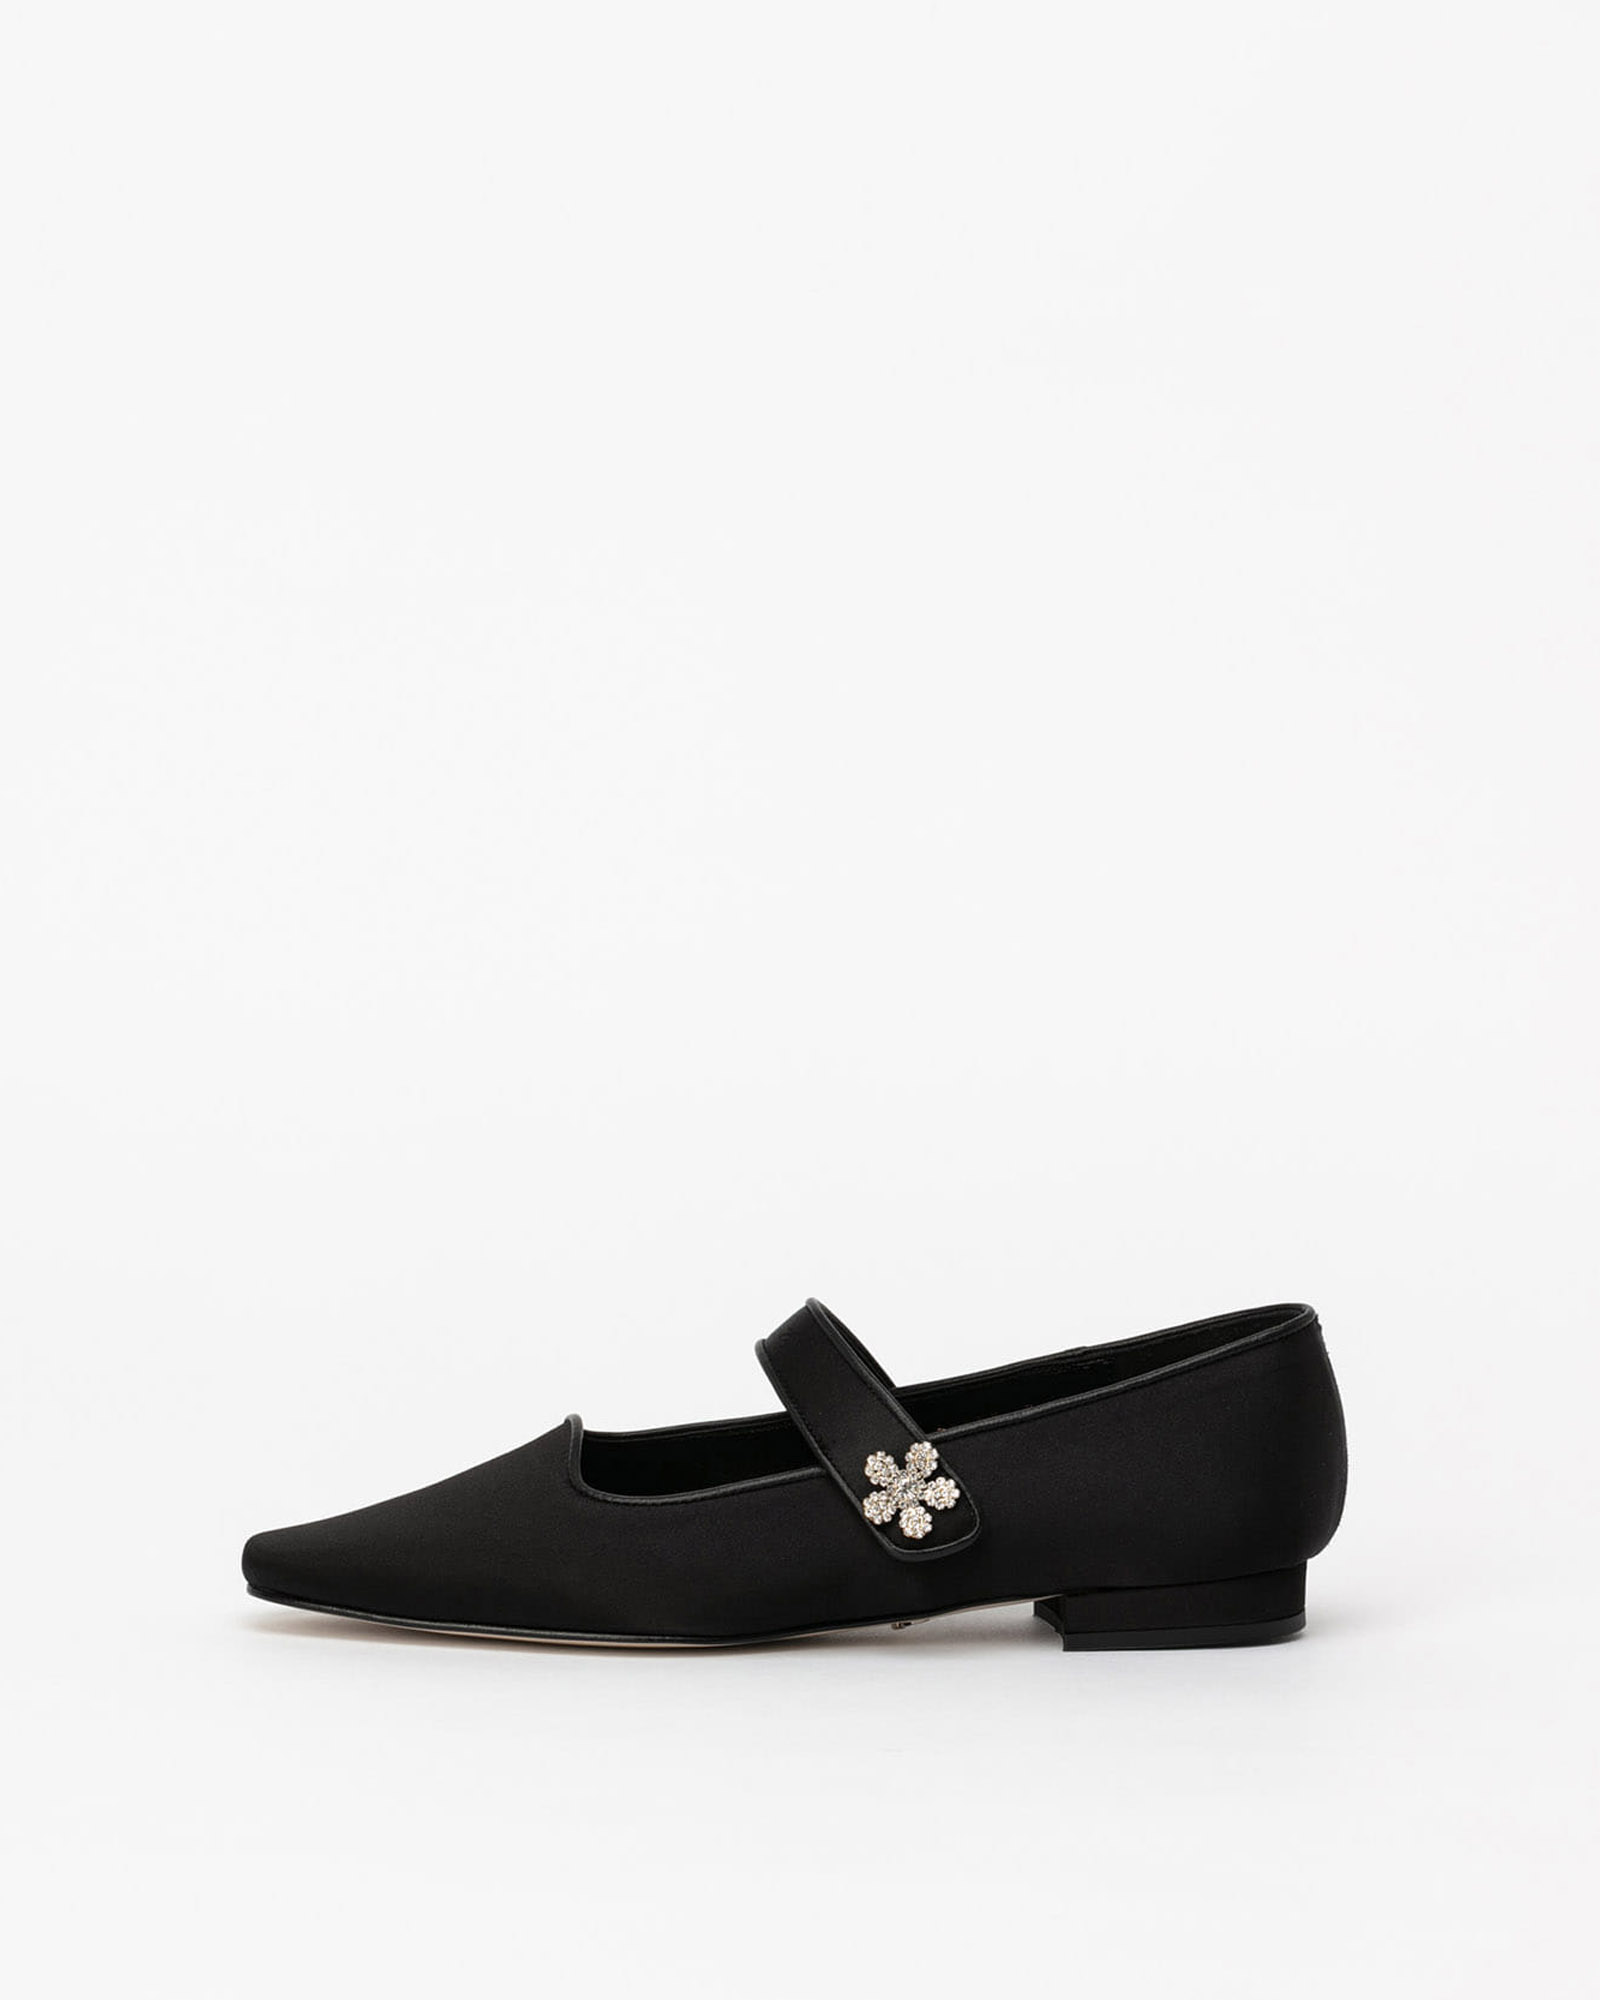 Fleur Maryjane Flat Shoes in Black Silk